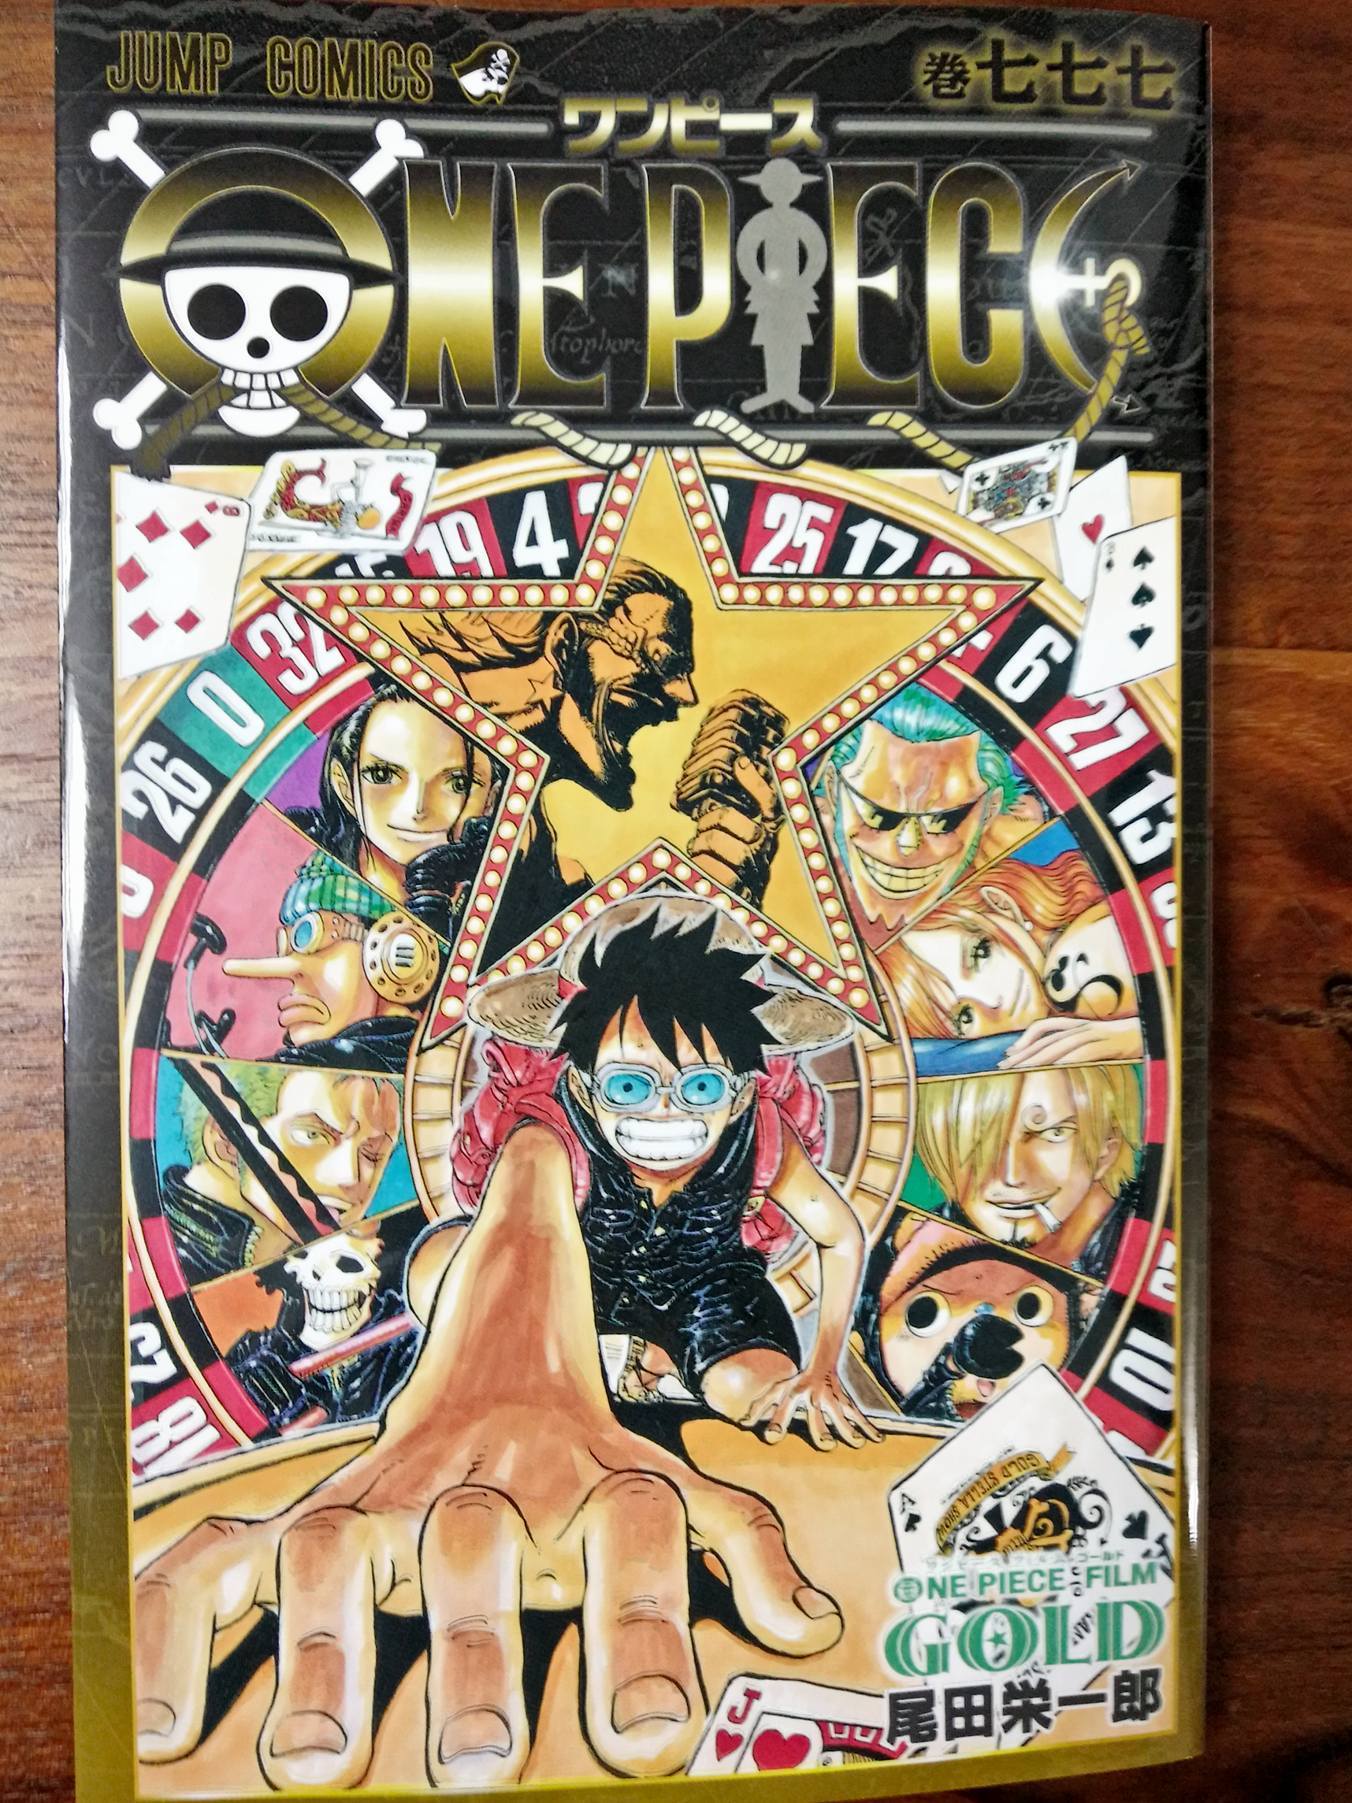 Spoil หนักมาก] One Piece Film Gold [ทั้ง เรื่อง ] - Pantip